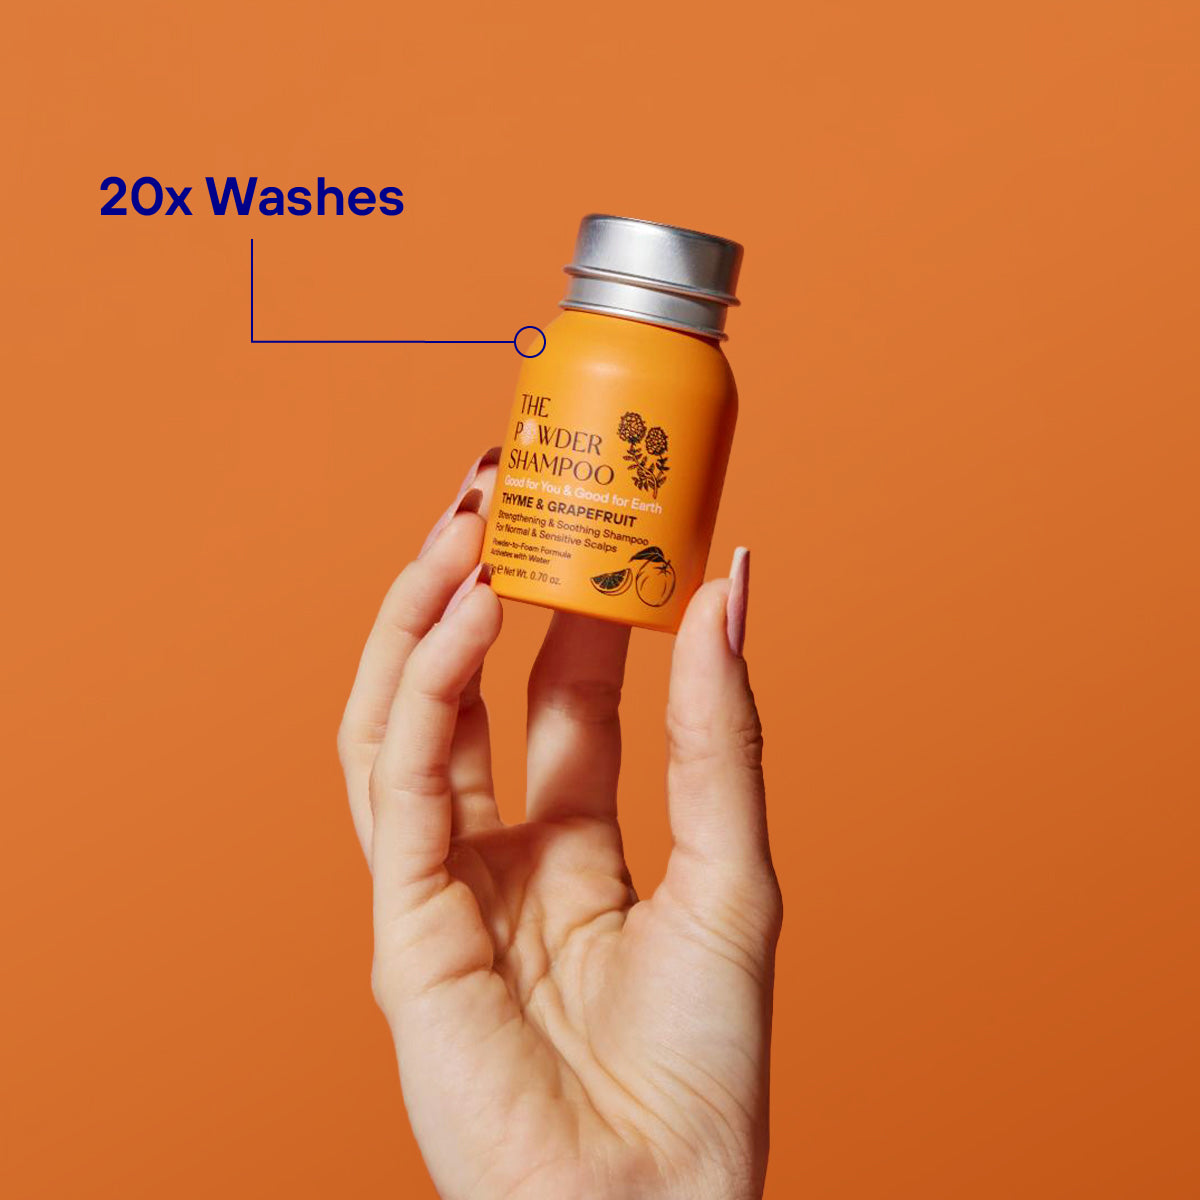 Mini bottle - Strengthening & Soothing Powder Shampoo For Normal & Sensitive Scalps 20g / 0.70oz